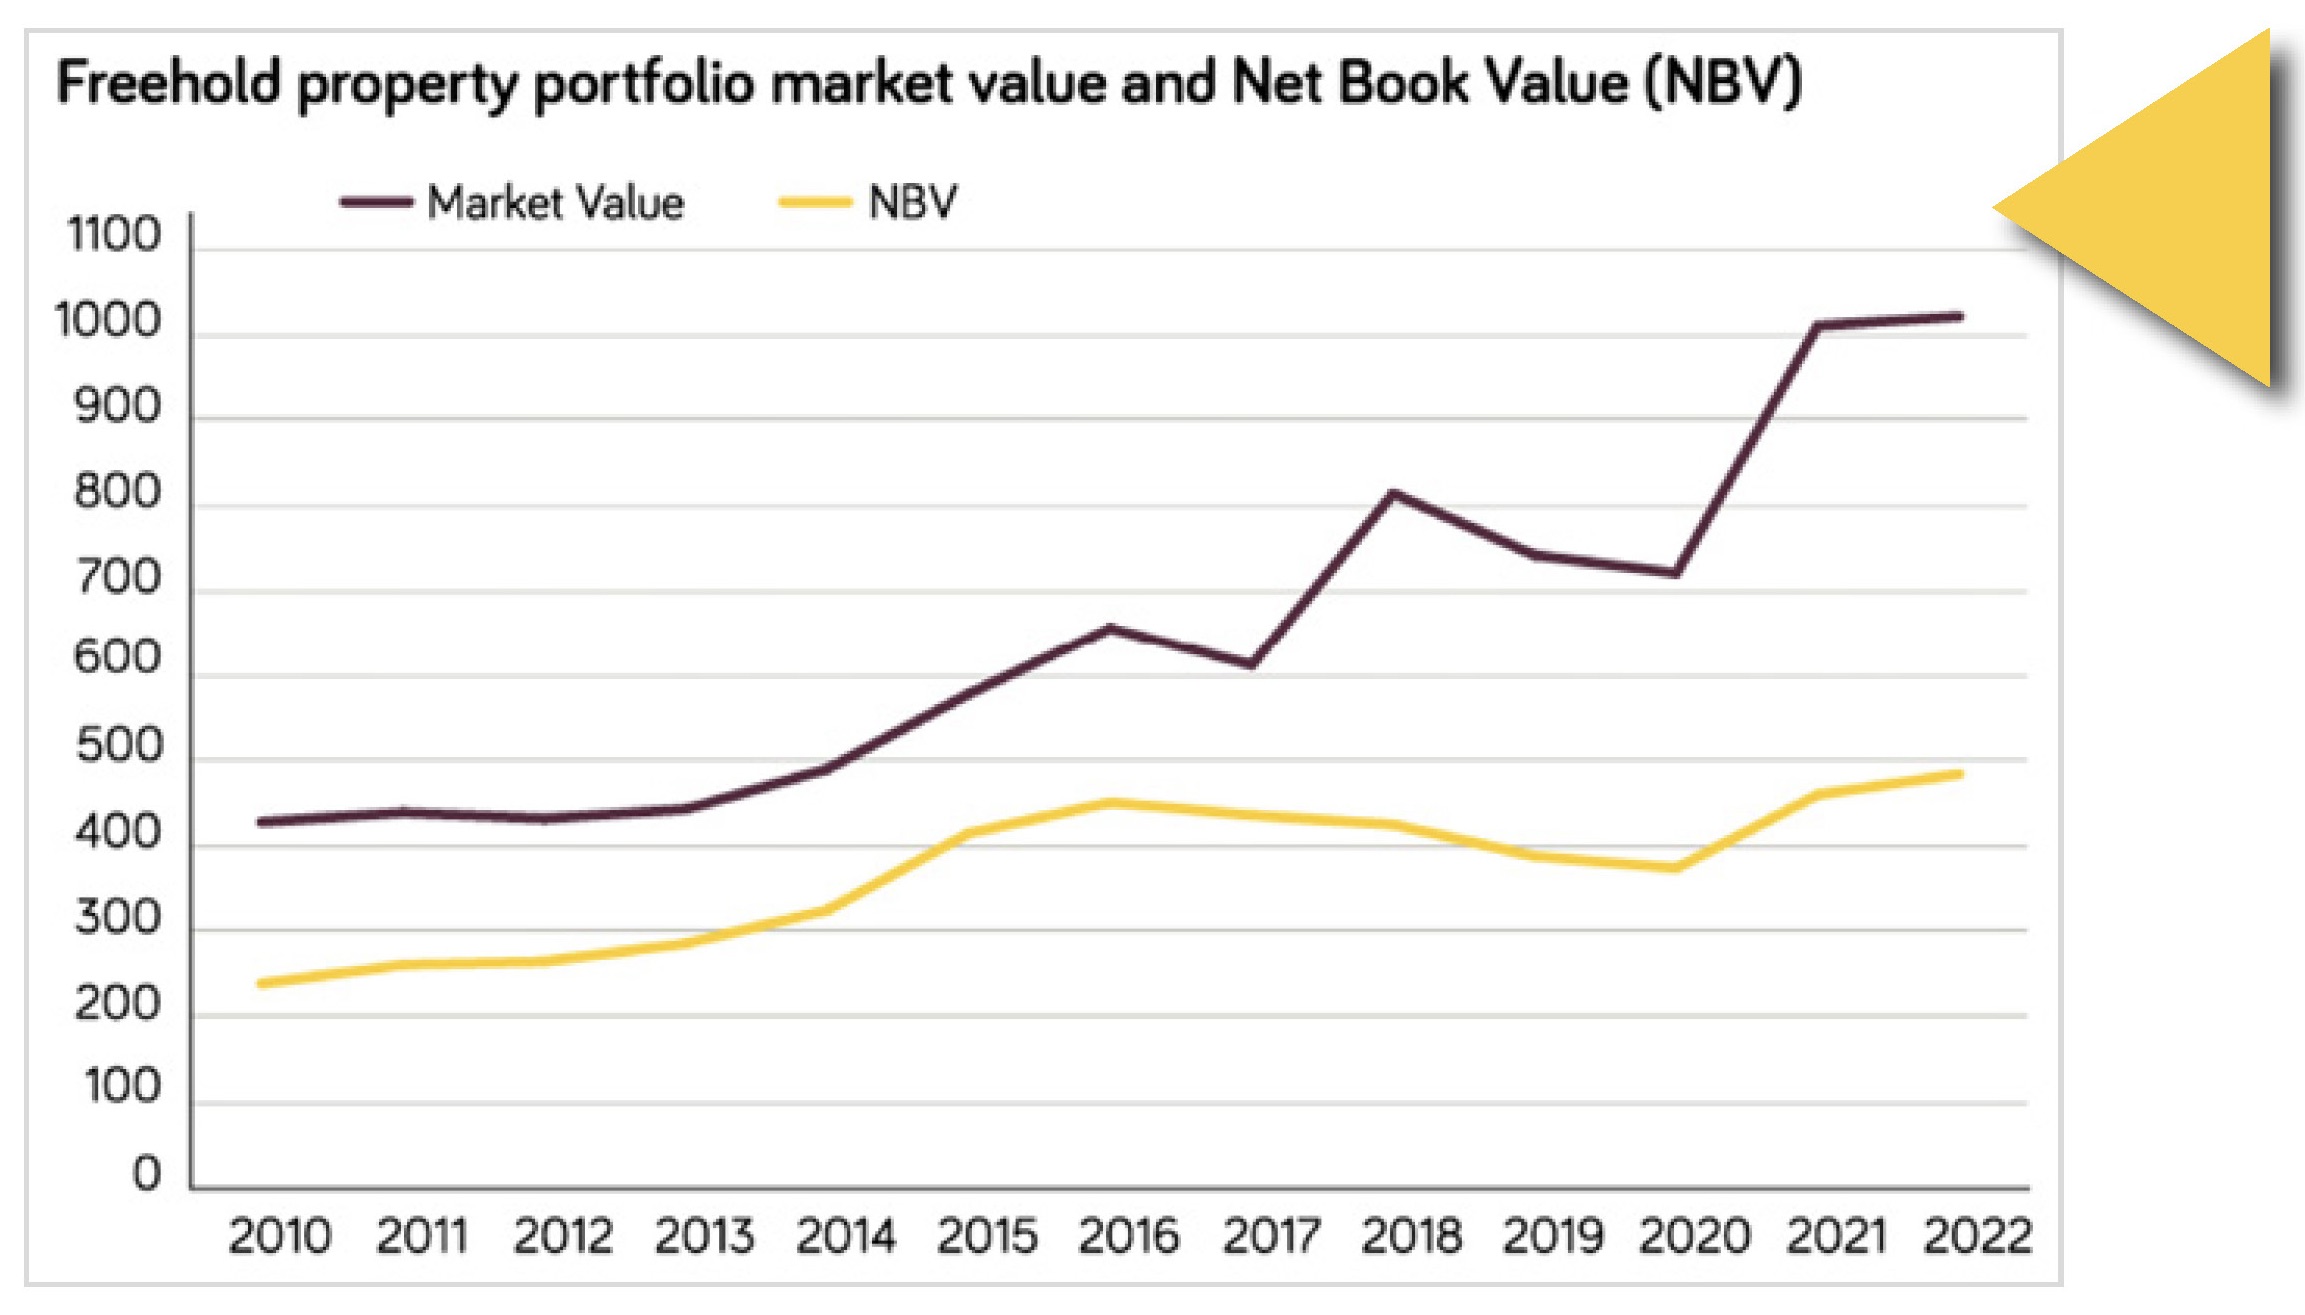 Image shows freehold property portfolio market value and Net book value (NBV)